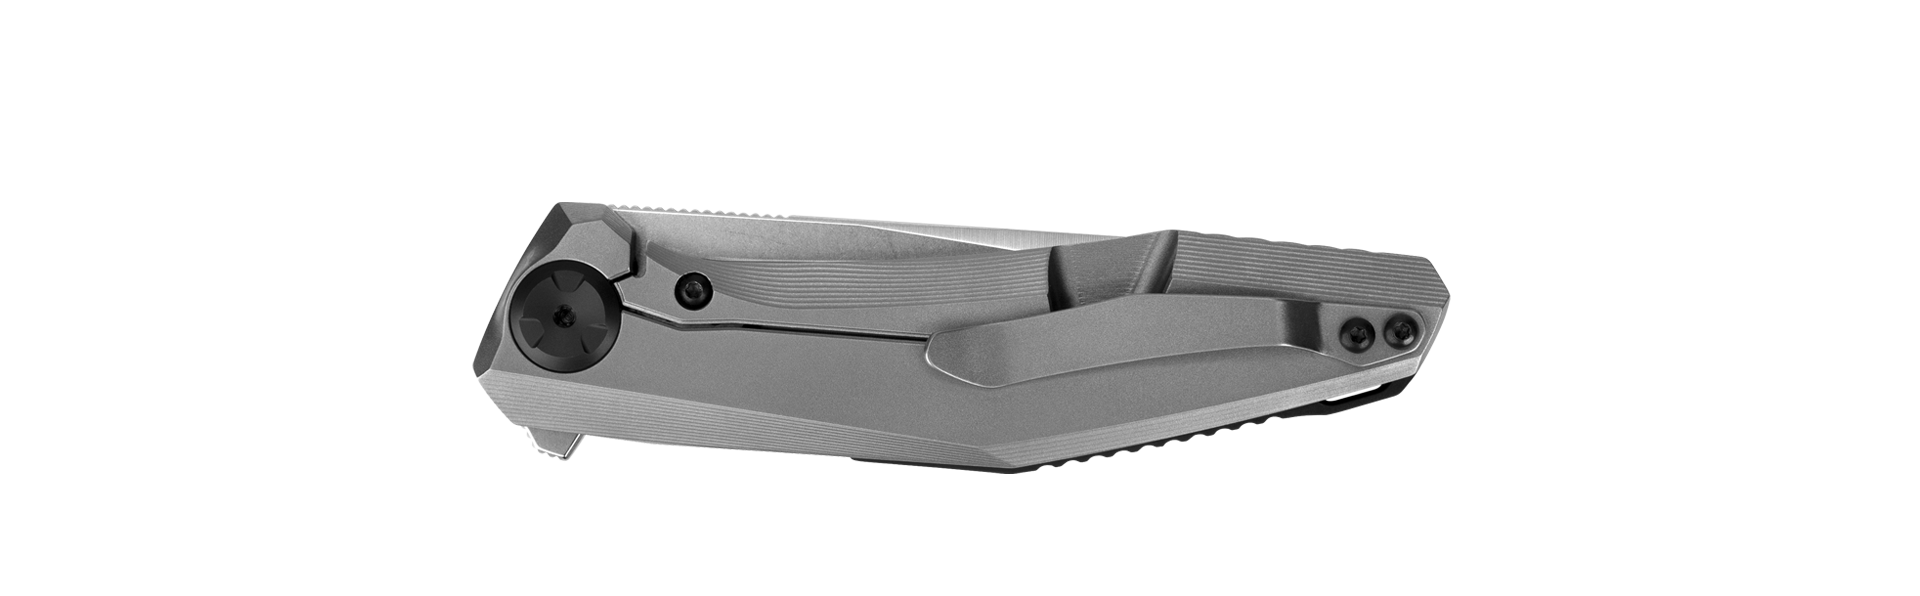 ZT 0470 Sinkevich Folding Knife – 20CV Steel, Titanium Handle with Carbon Fiber | Zero Tolerance